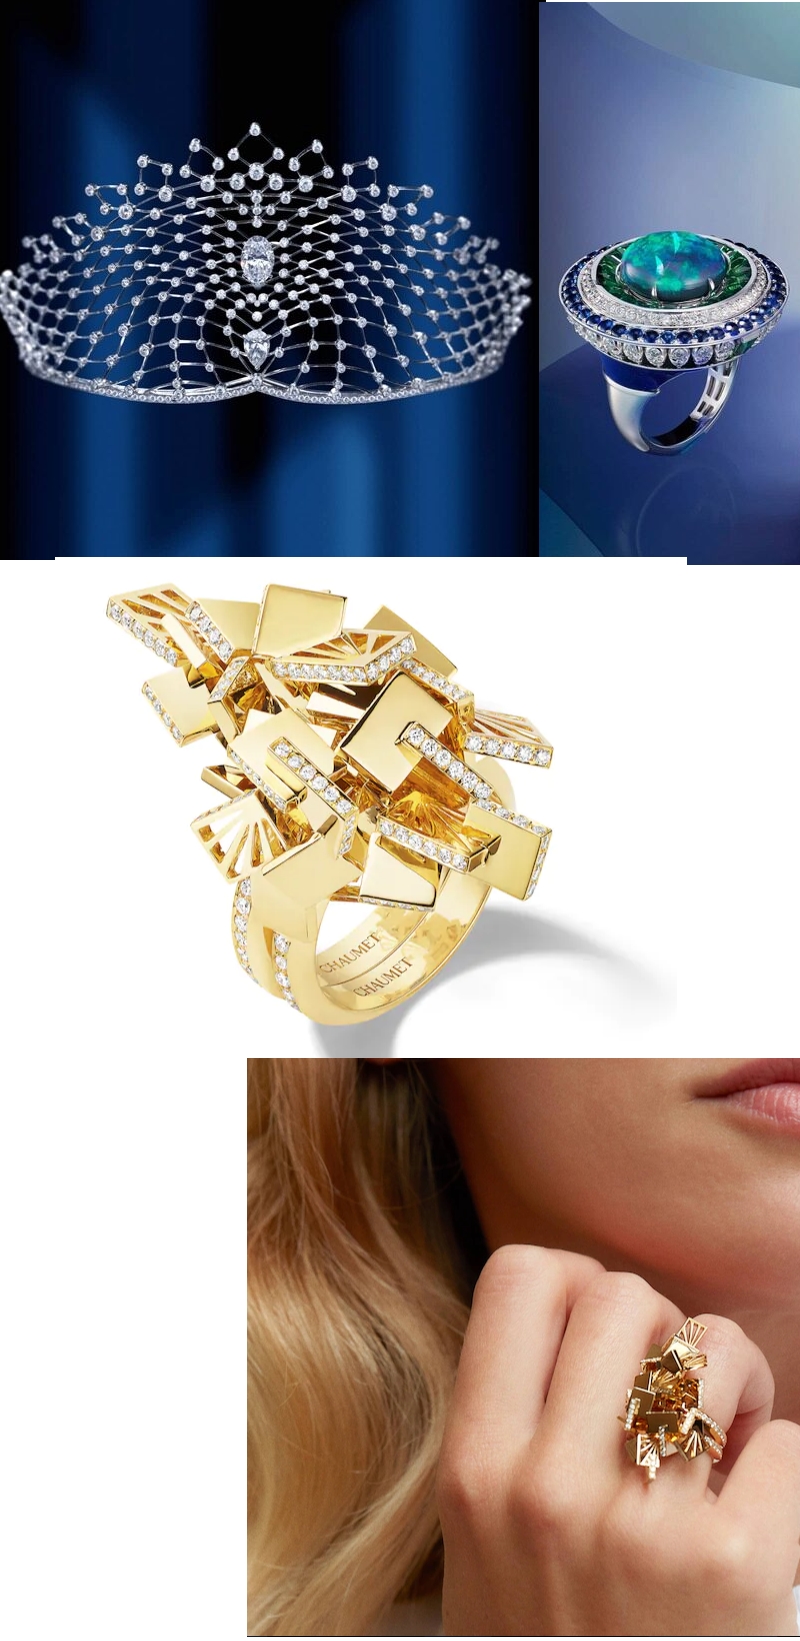 Jewellery rings - High jewellery rings by Chaumet